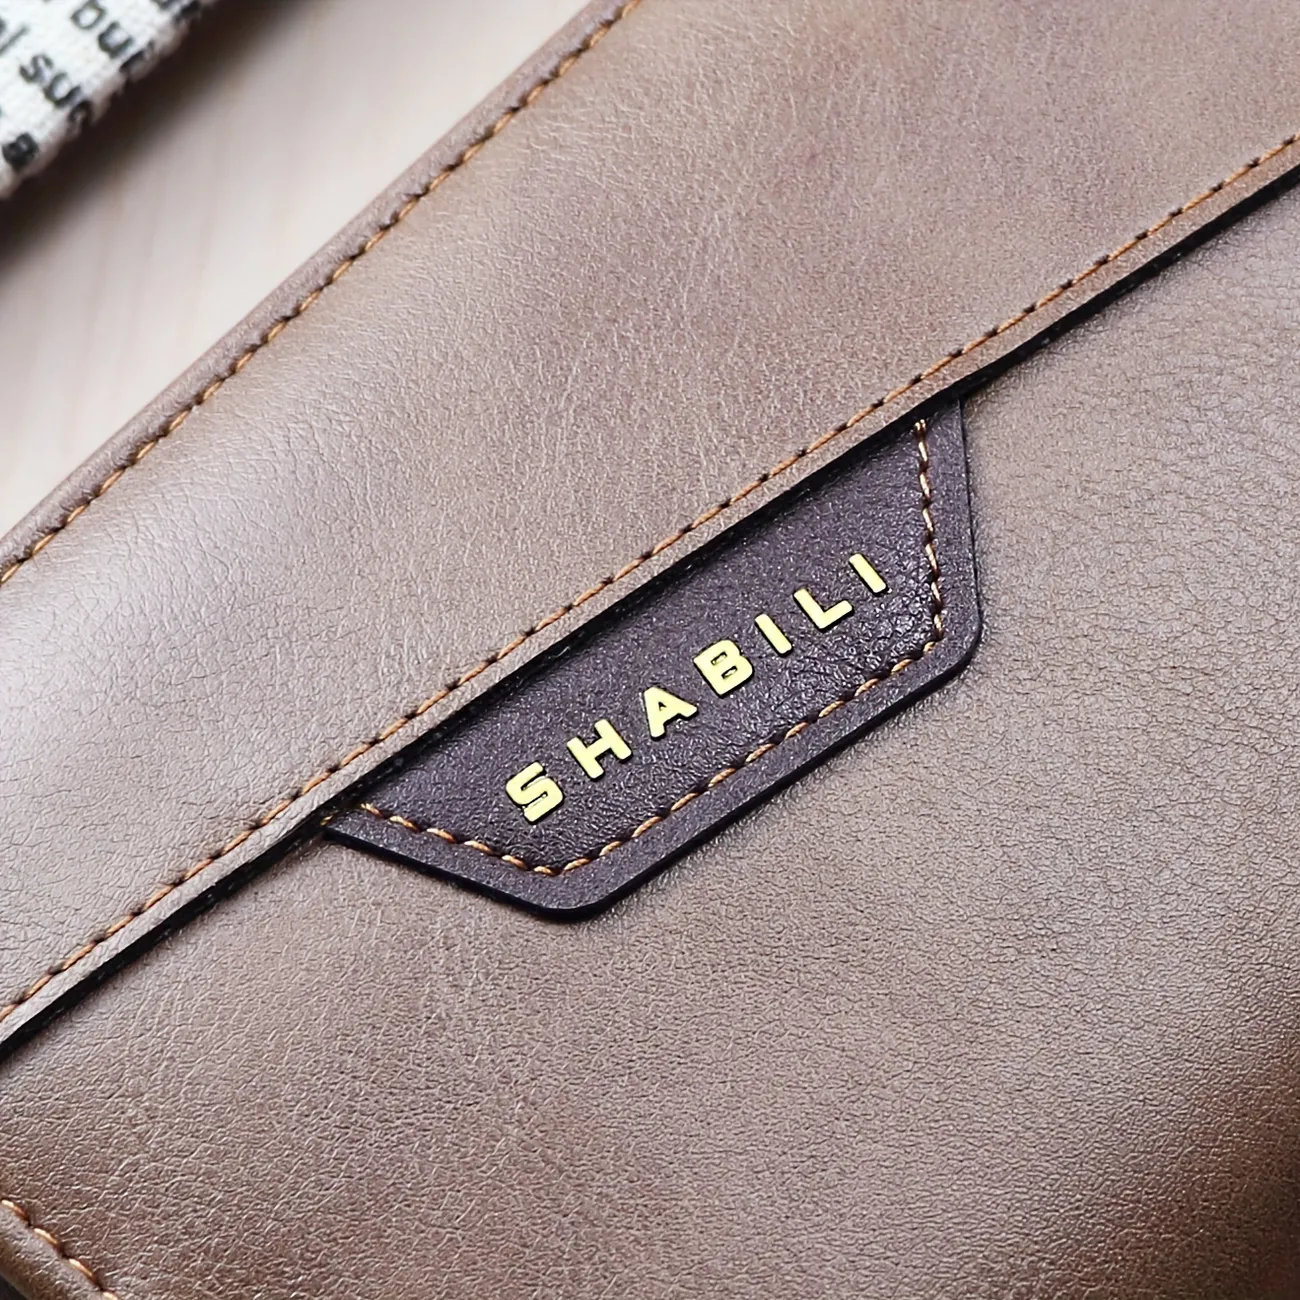 Genuine Leather Men's Business Clutch Wallet Zipper Envelope Bag Large  Capacity